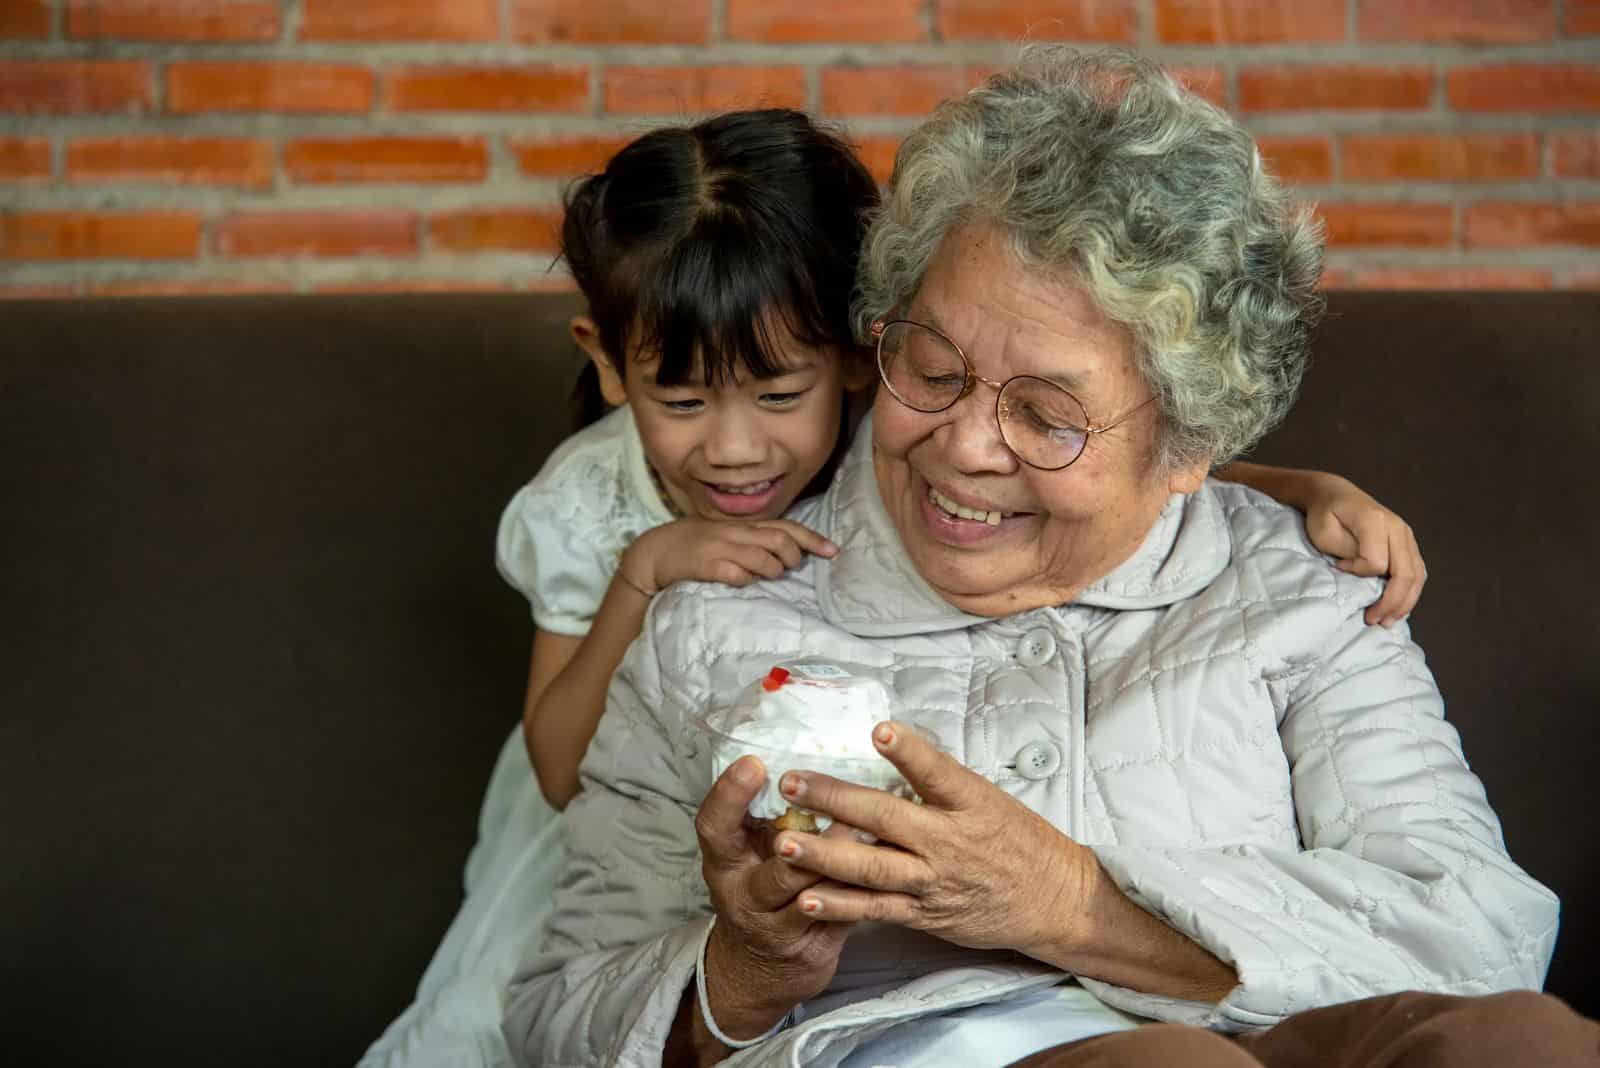 grandmother celebrates her birthday with her grandson